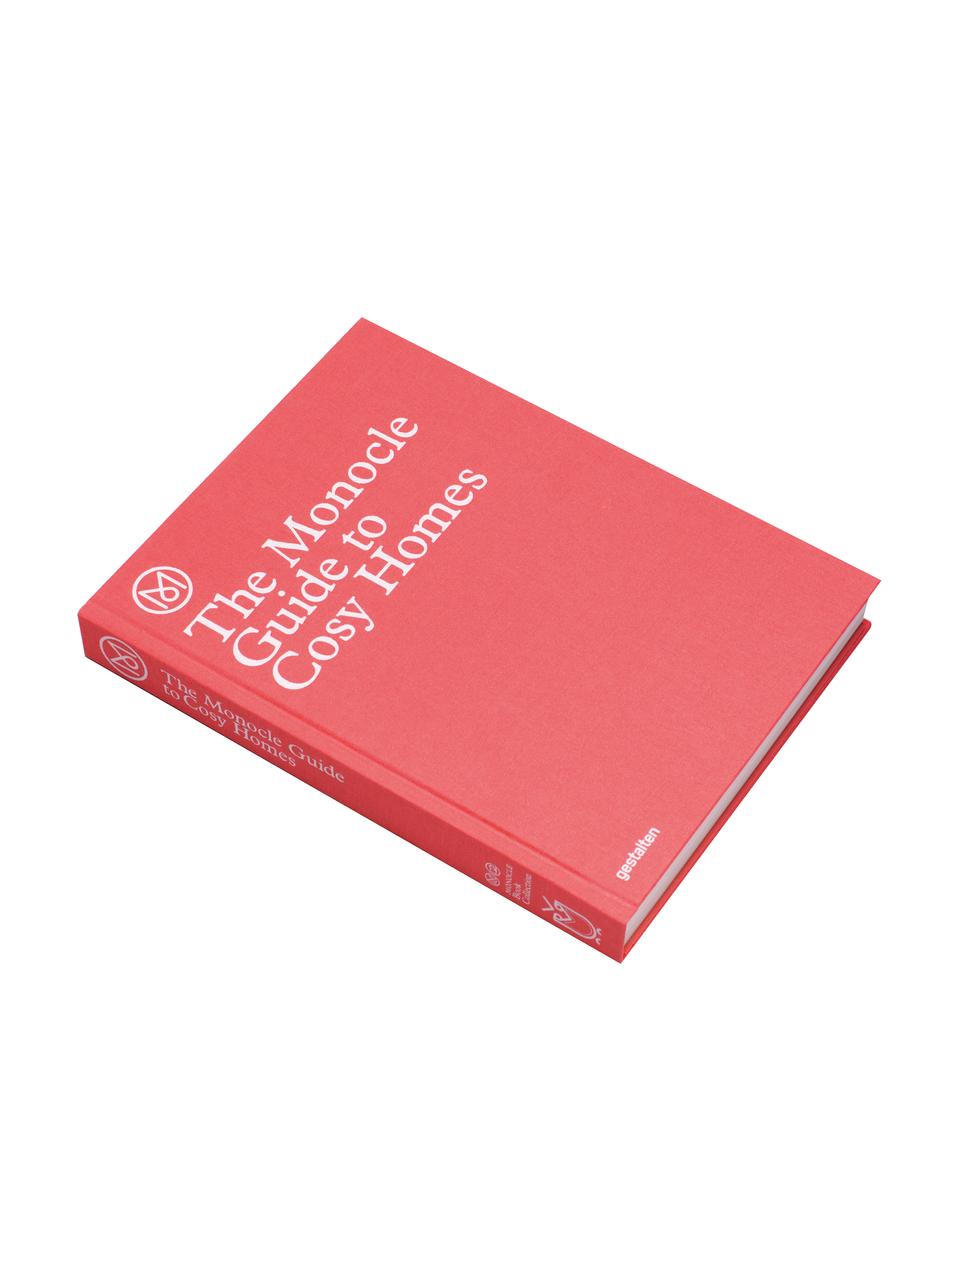 Libro ilustrado The Monocle Guide to Cosy Homes, Papel, Rojo, An 20 x L 27 cm